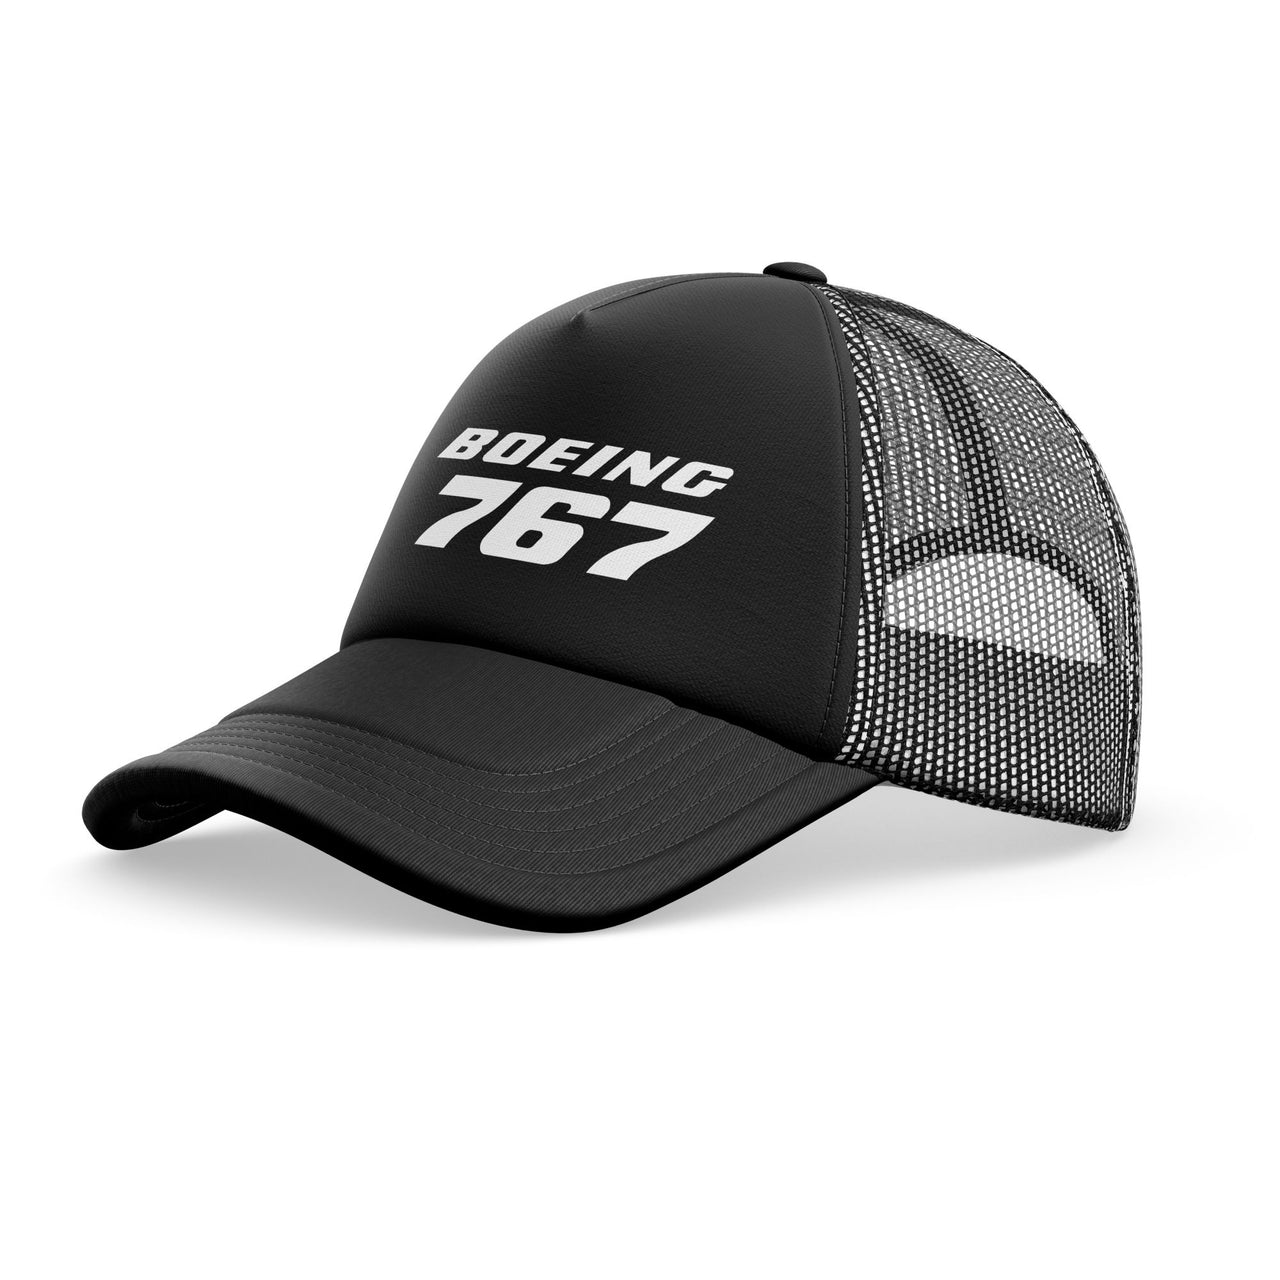 Boeing 767 & Text Designed Trucker Caps & Hats